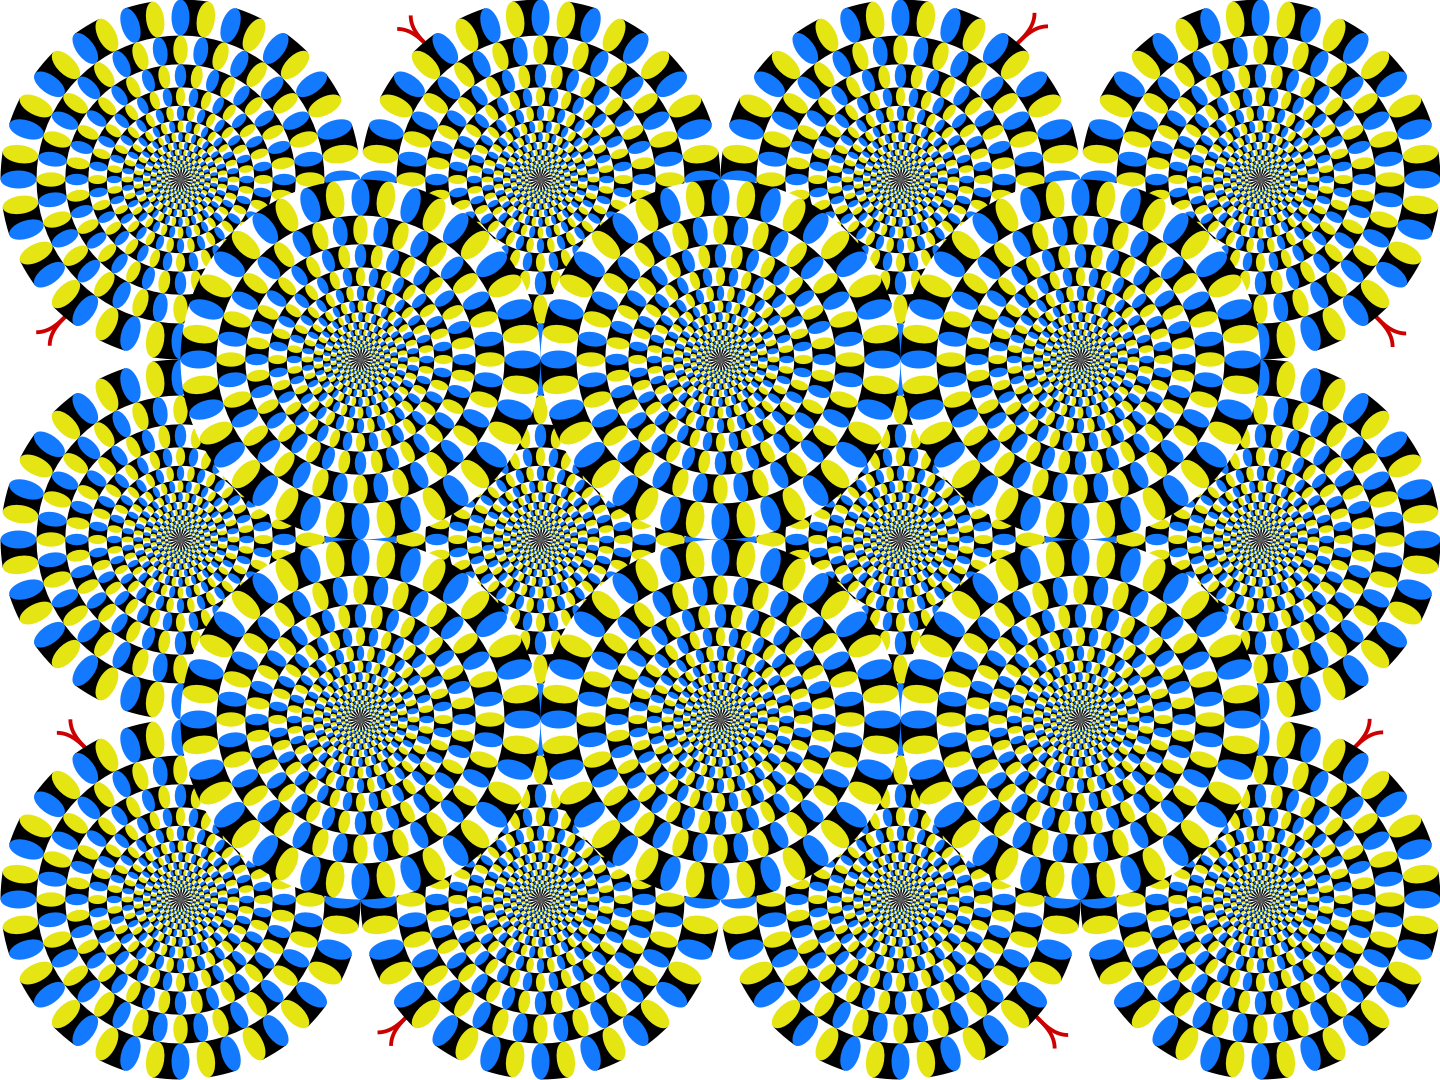 Amazing Optical Illusions IllusionWorks